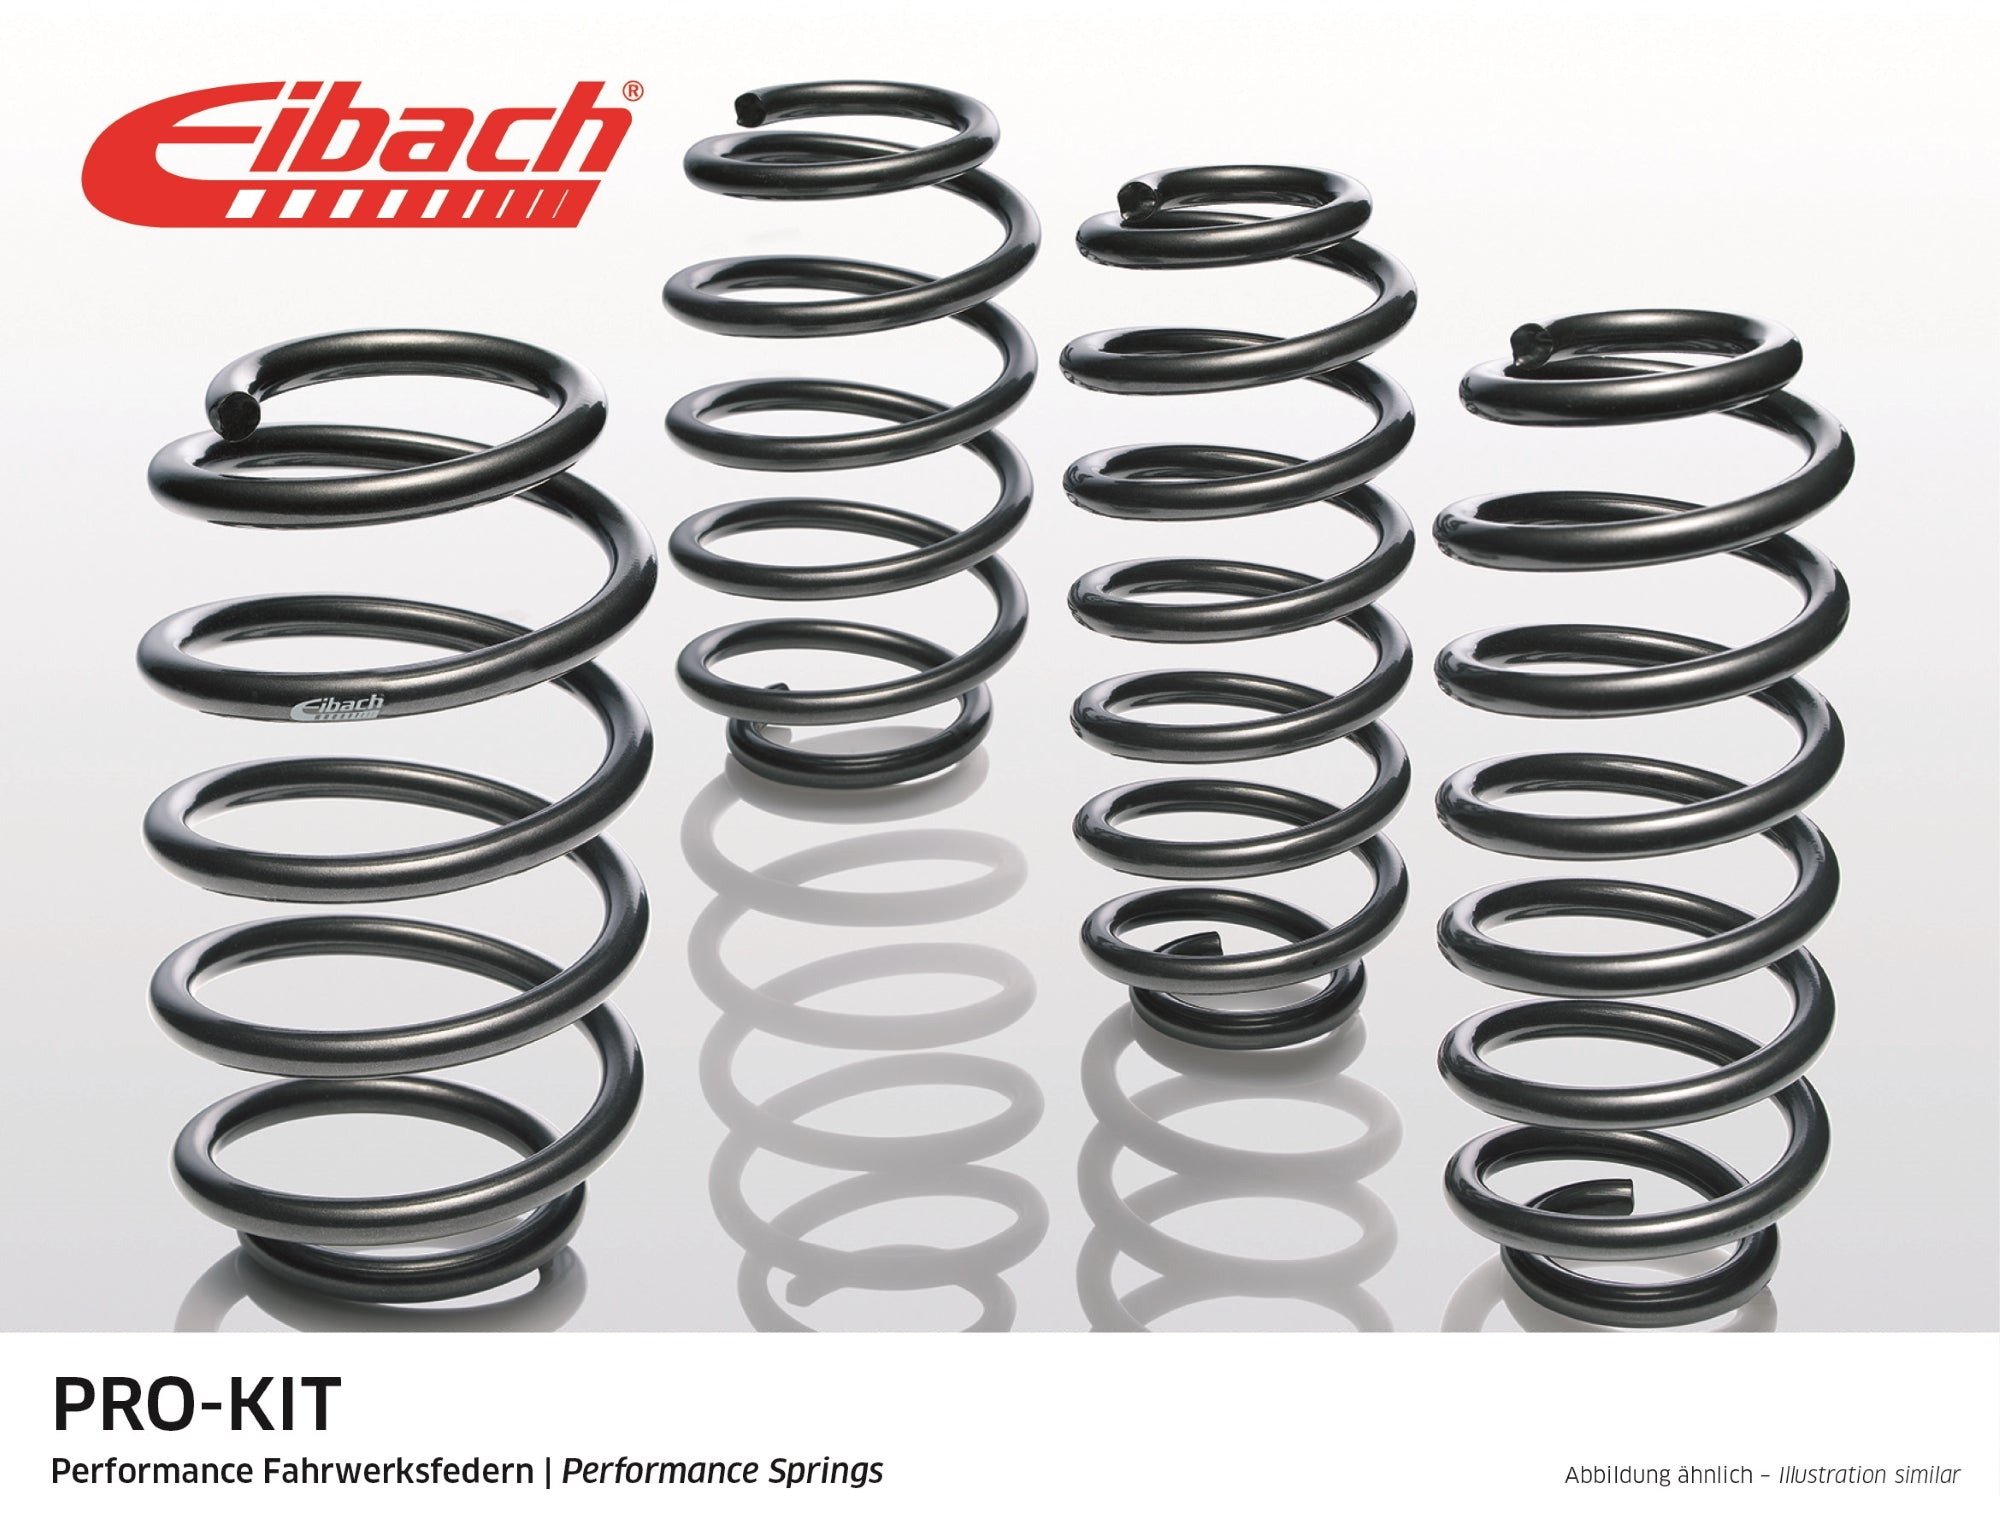 Eibach Suspension Pro-Kit (Performance Springs) Lowering Kit CAYMAN 2012-17 #E10-72-013-01-22